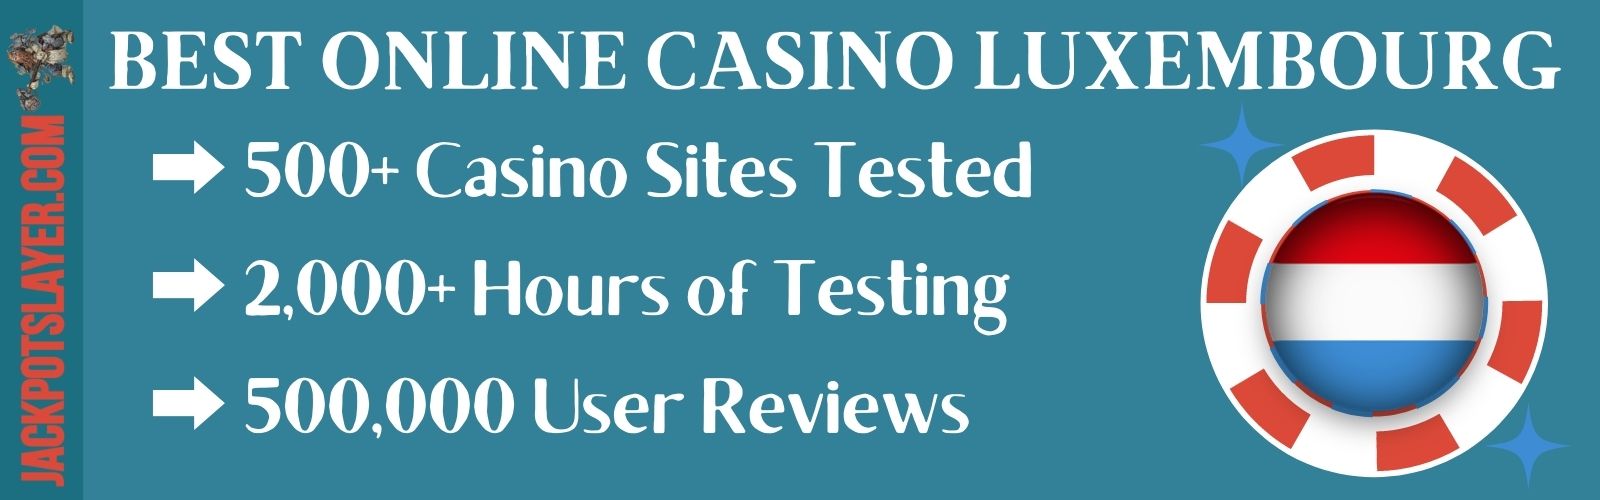 Online Casino Luxembourg